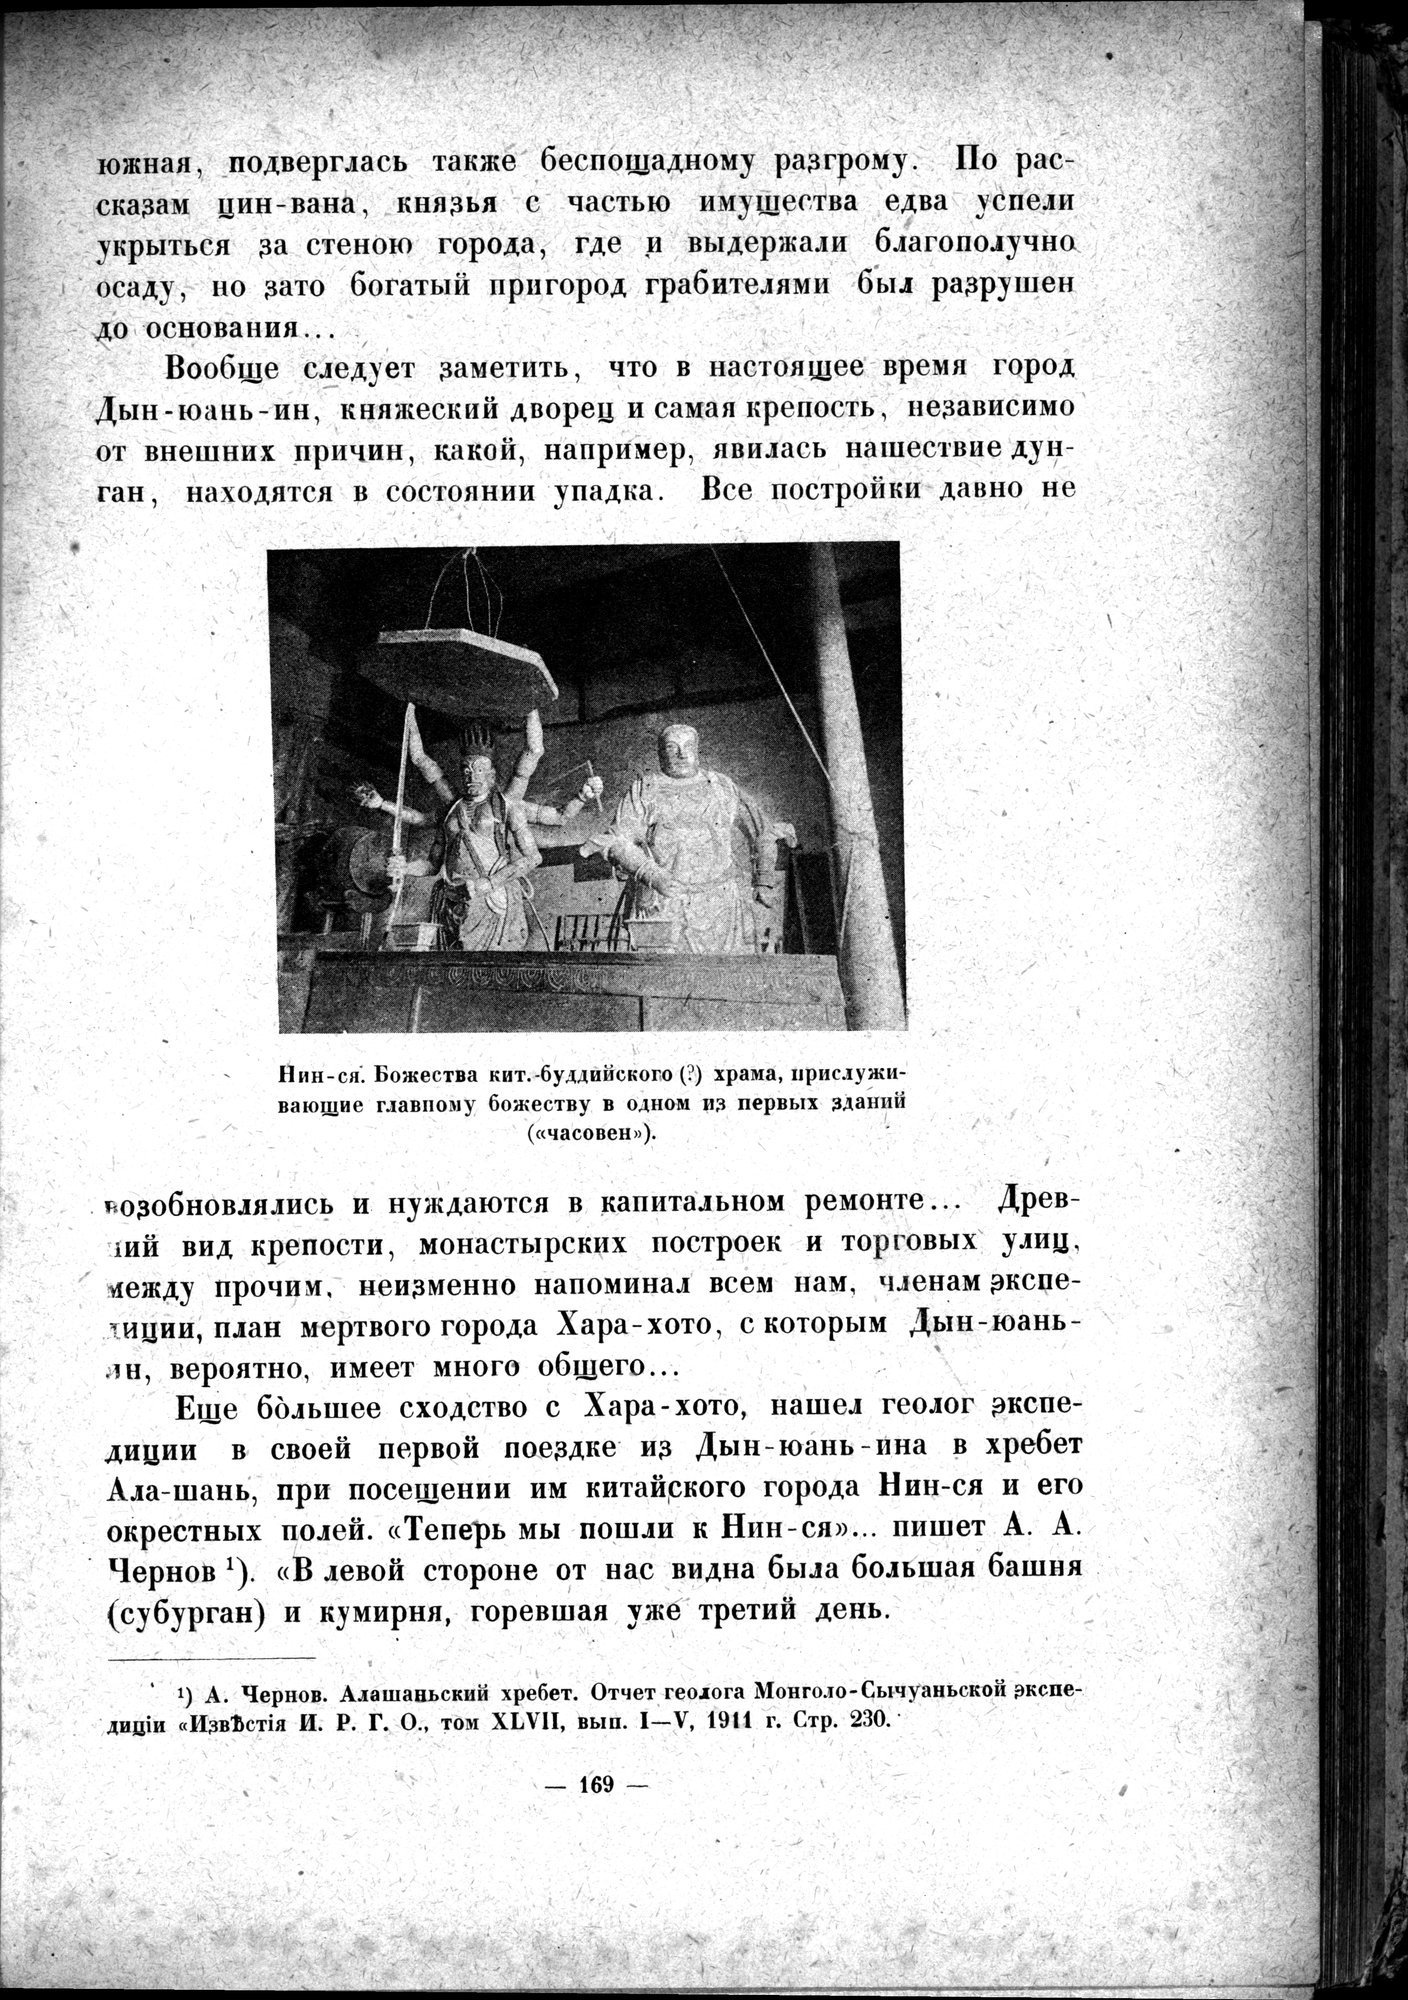 Mongoliya i Amdo i mertby gorod Khara-Khoto : vol.1 / Page 201 (Grayscale High Resolution Image)